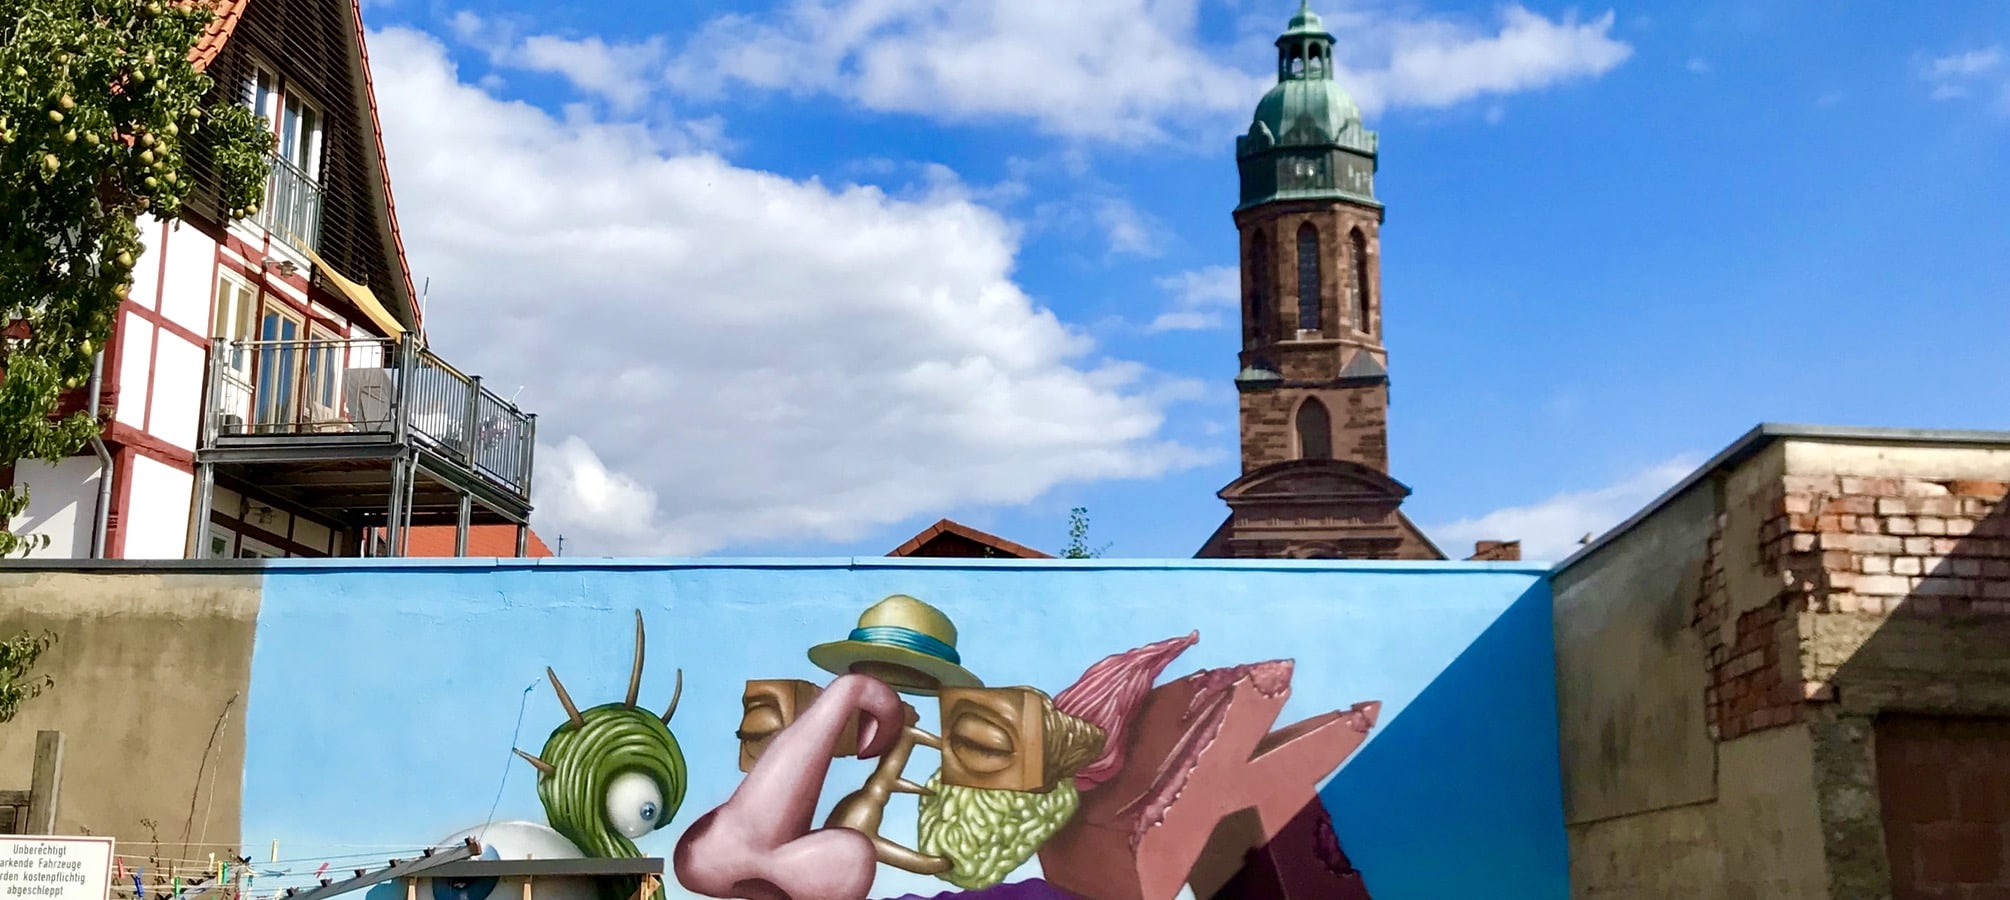 Mural Scek Streetart Fachwerk Marktkirche Turm Einbeck